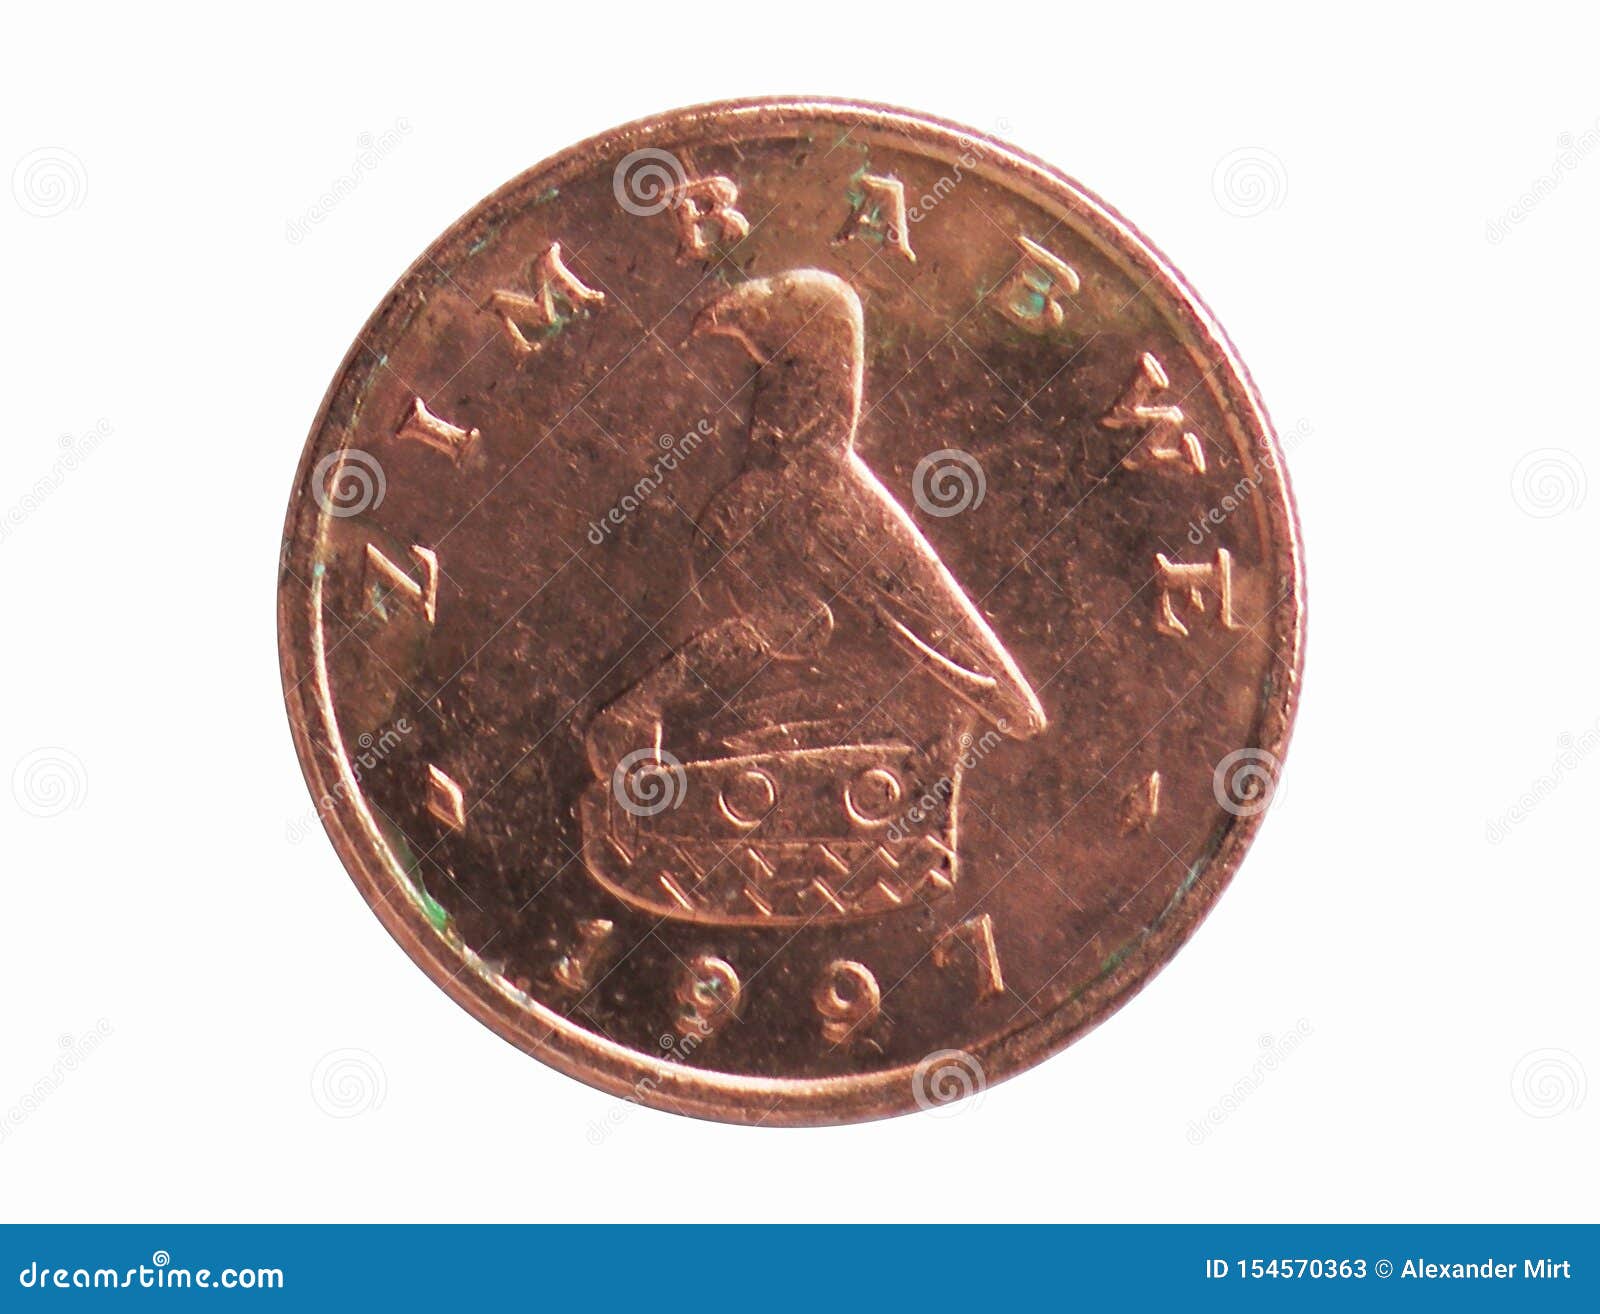 1 cent coin, 1980~1999 - 1st circulation series, bank of zimbabwe